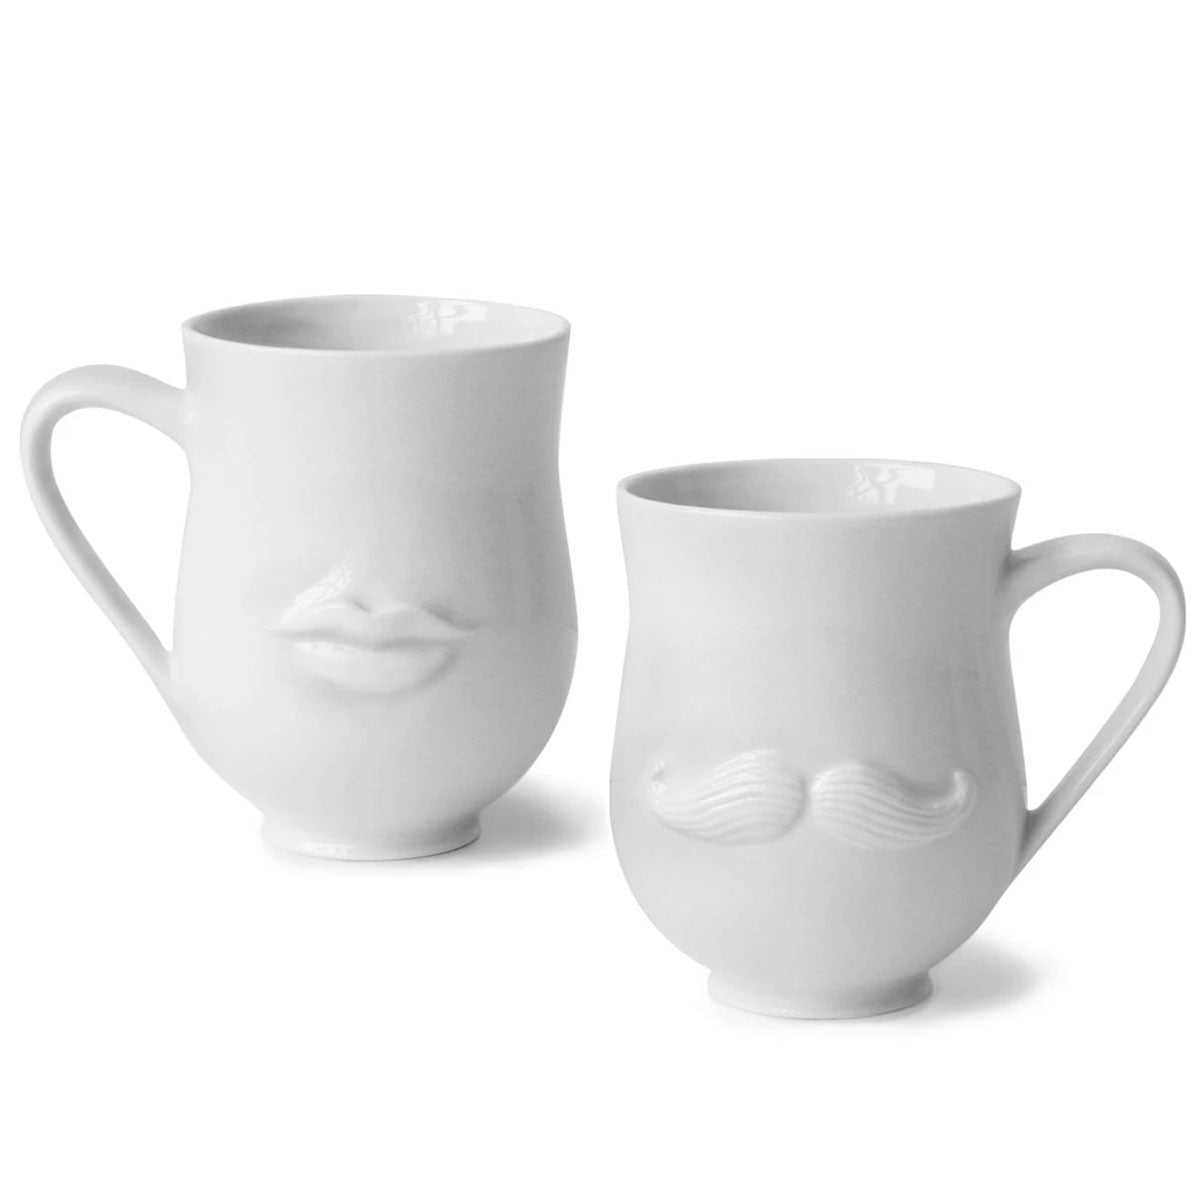 Mr. & Mrs. Muse Mugs - RSVP Style